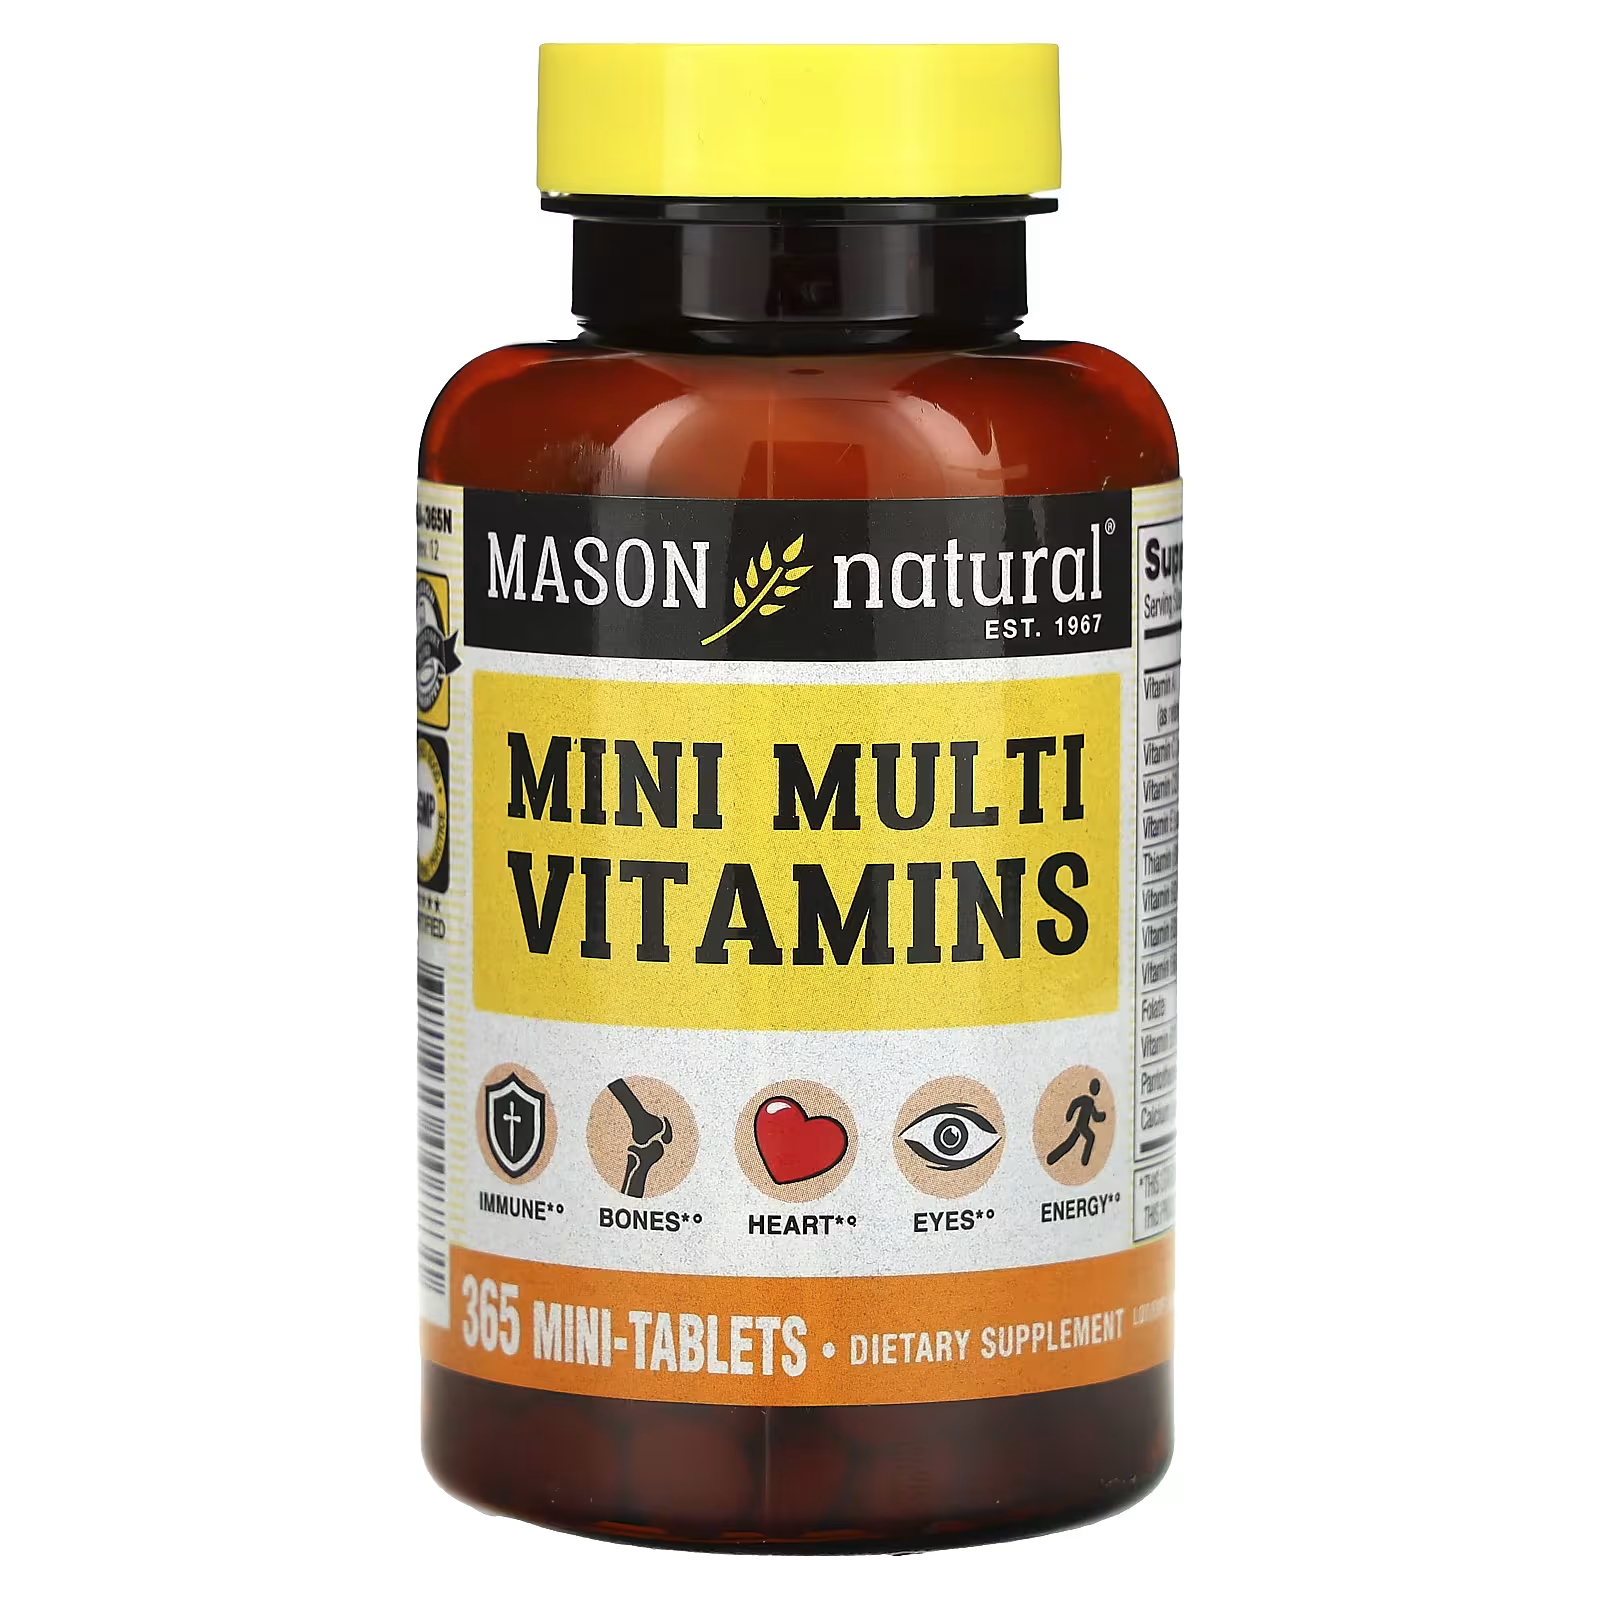 Mason Natural Mini Мультивитамины 365 мини-таблеток